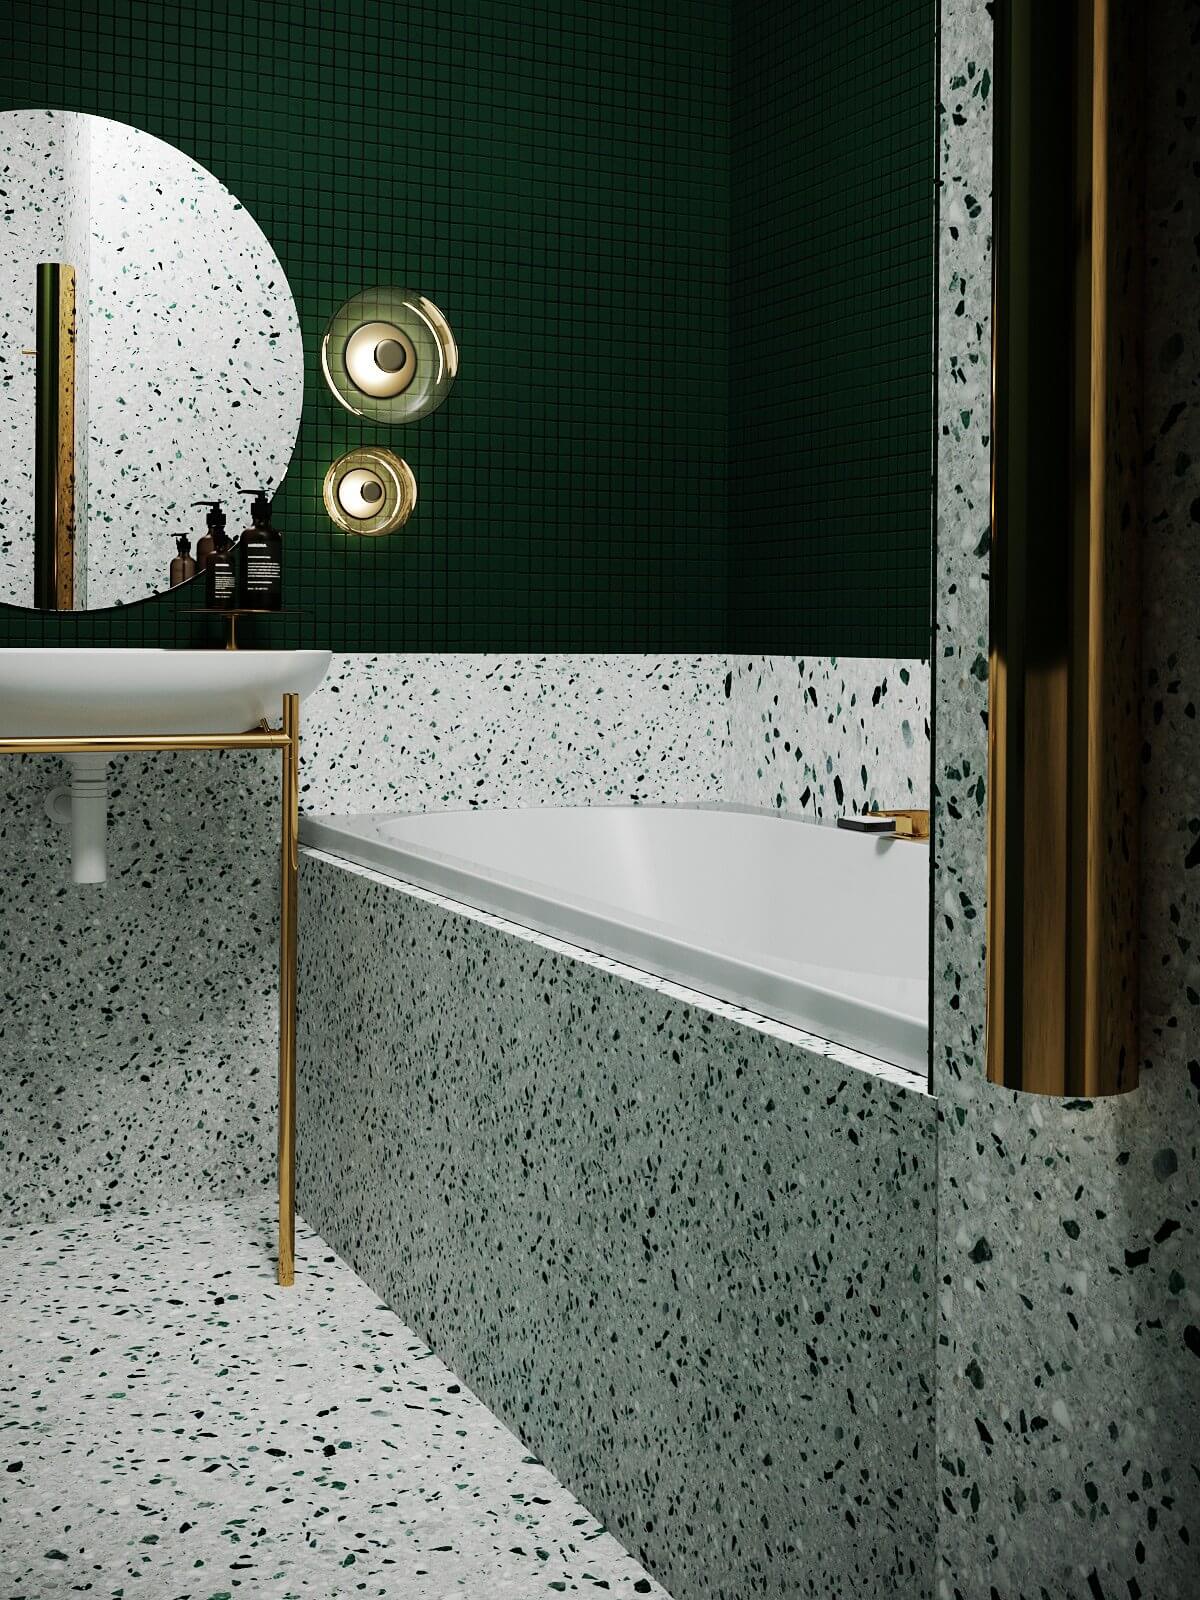 New York concept house bathroom bath - cgi visualization